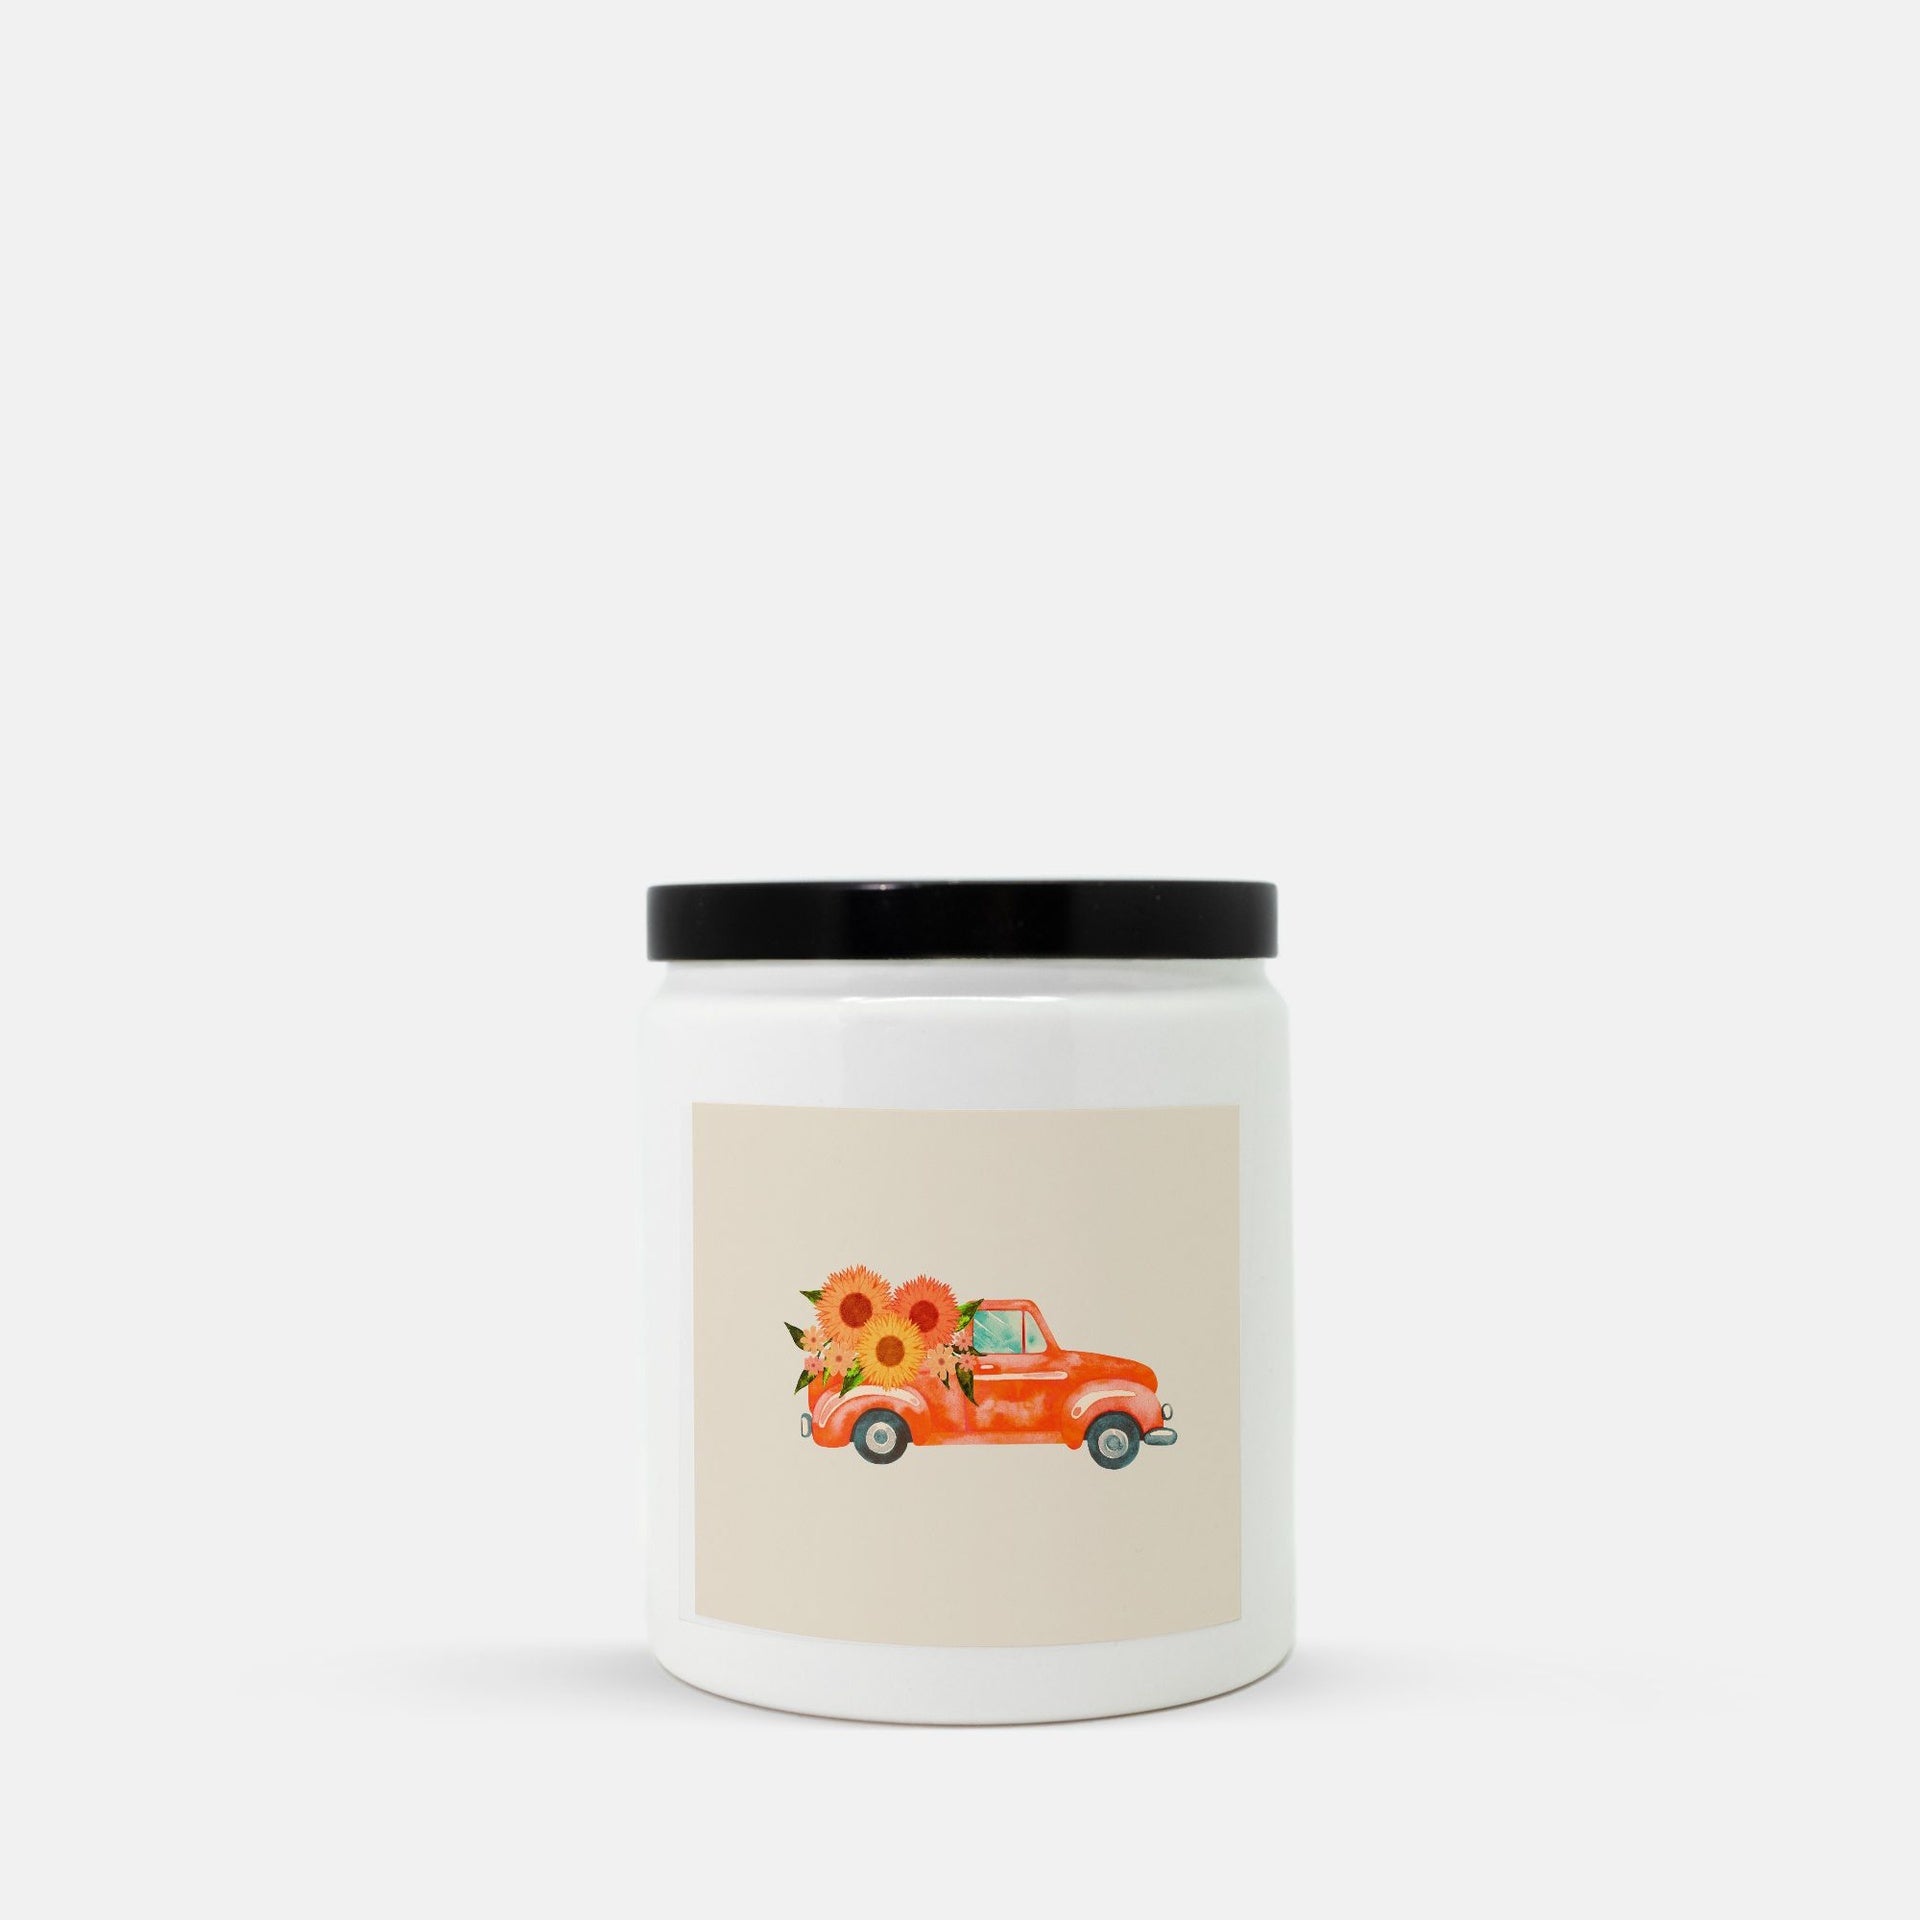 Lifestyle Details - Bright Orange Rustic Truck Ceramic Candle w Black Lid - Macintosh